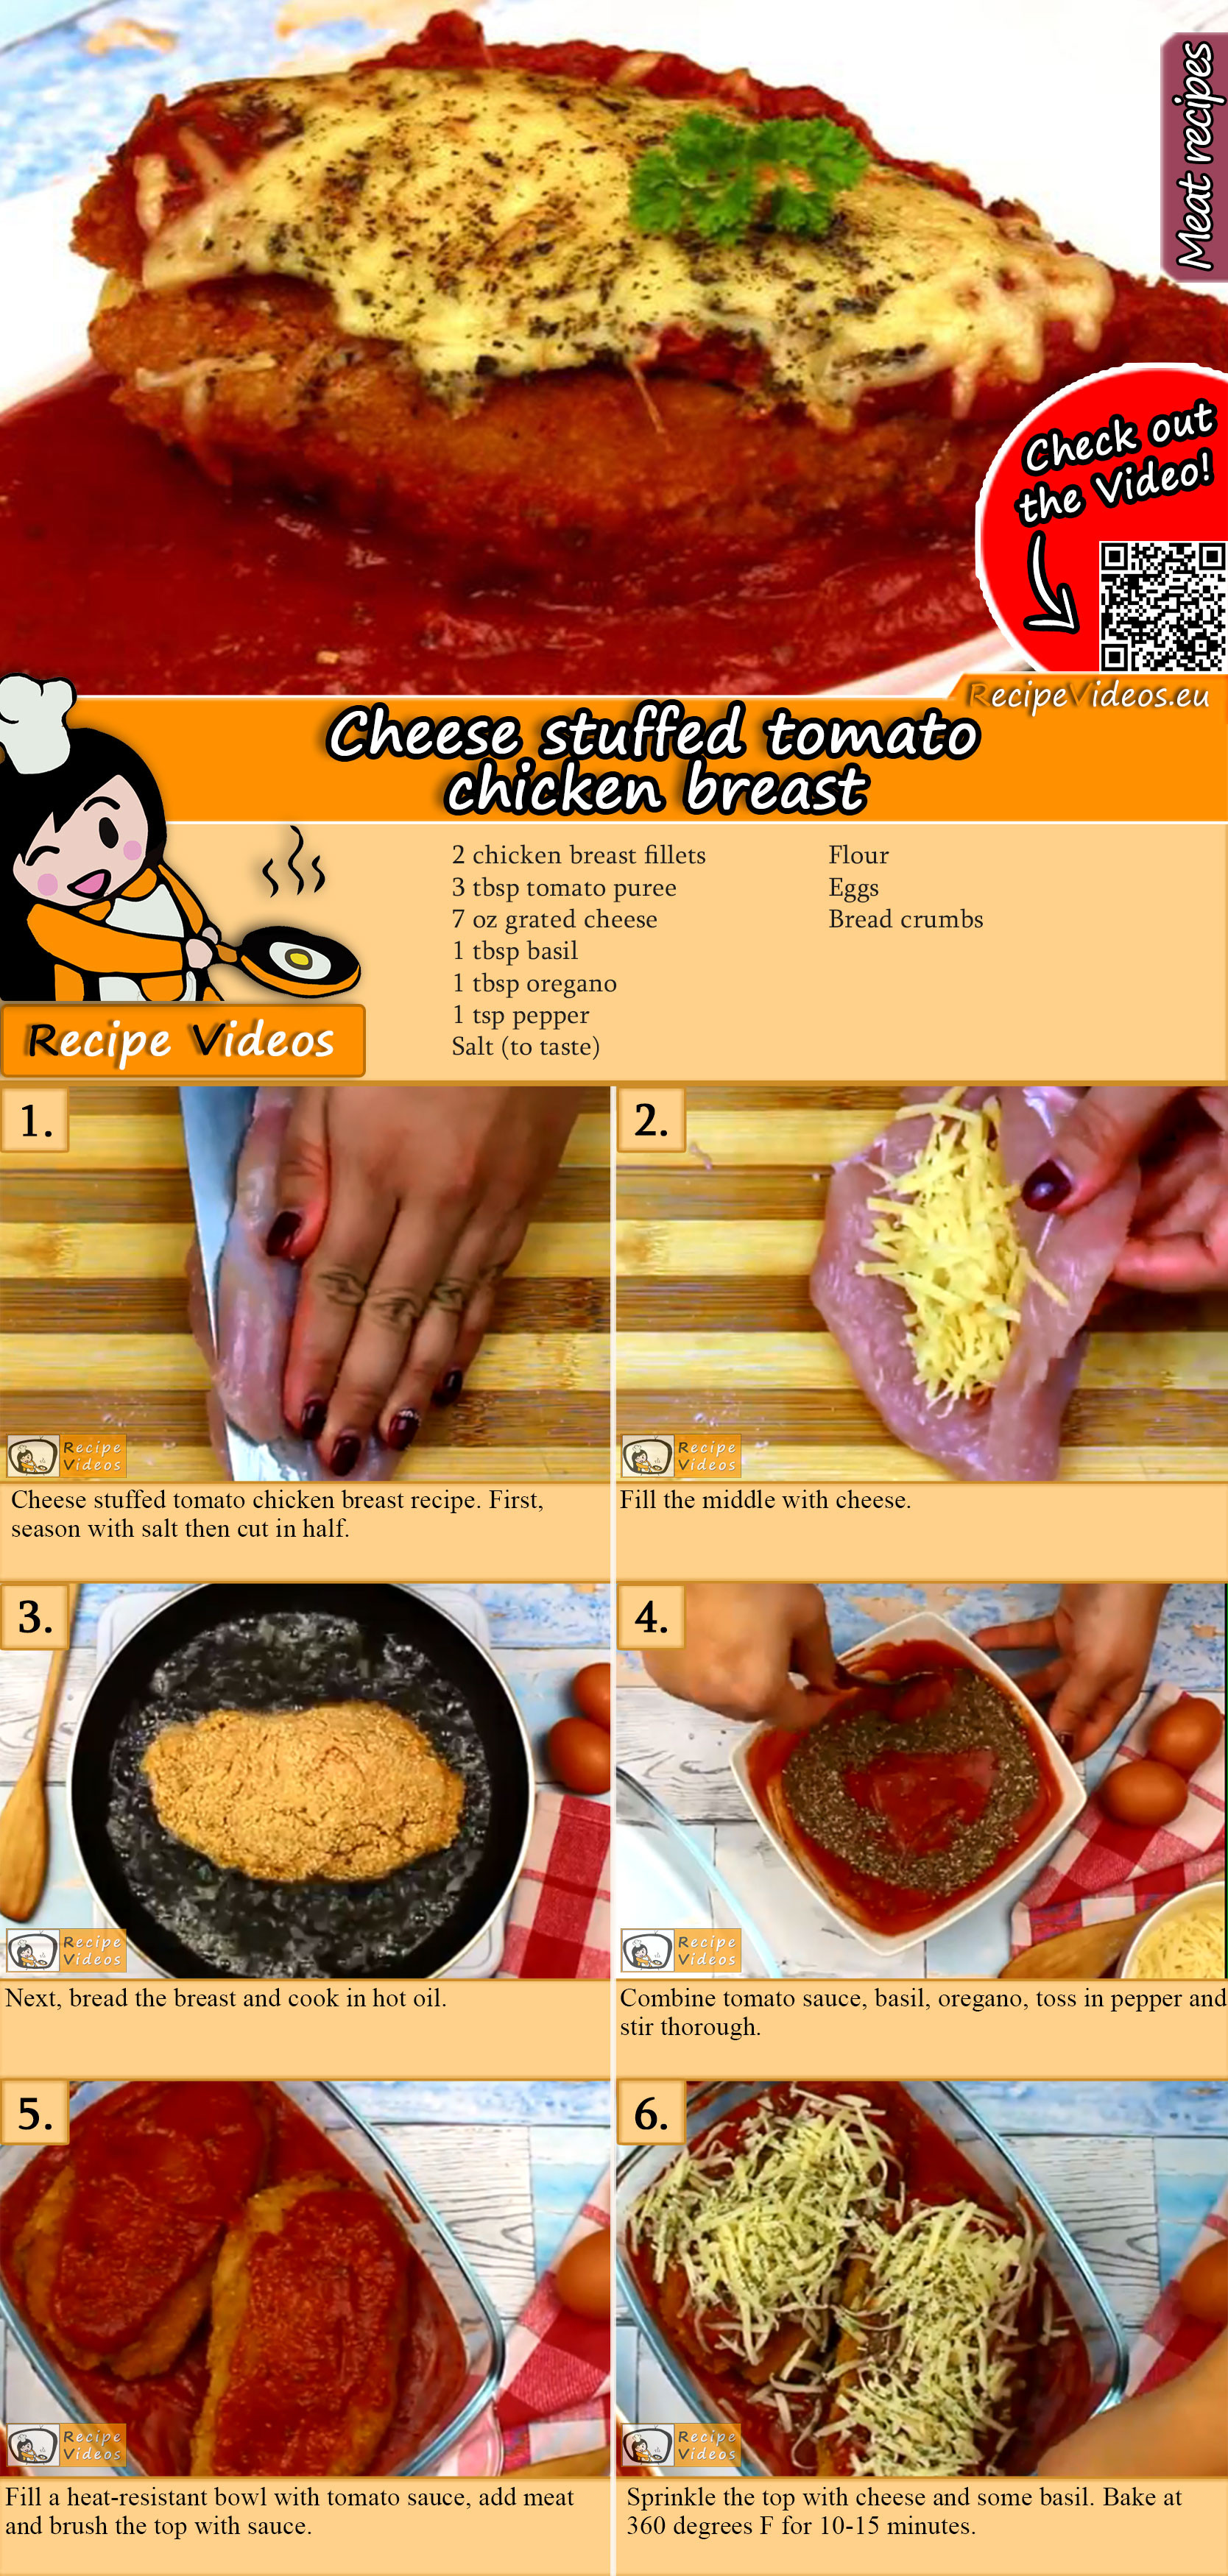 Cheese stuffed tomato chicken breast recipe with video